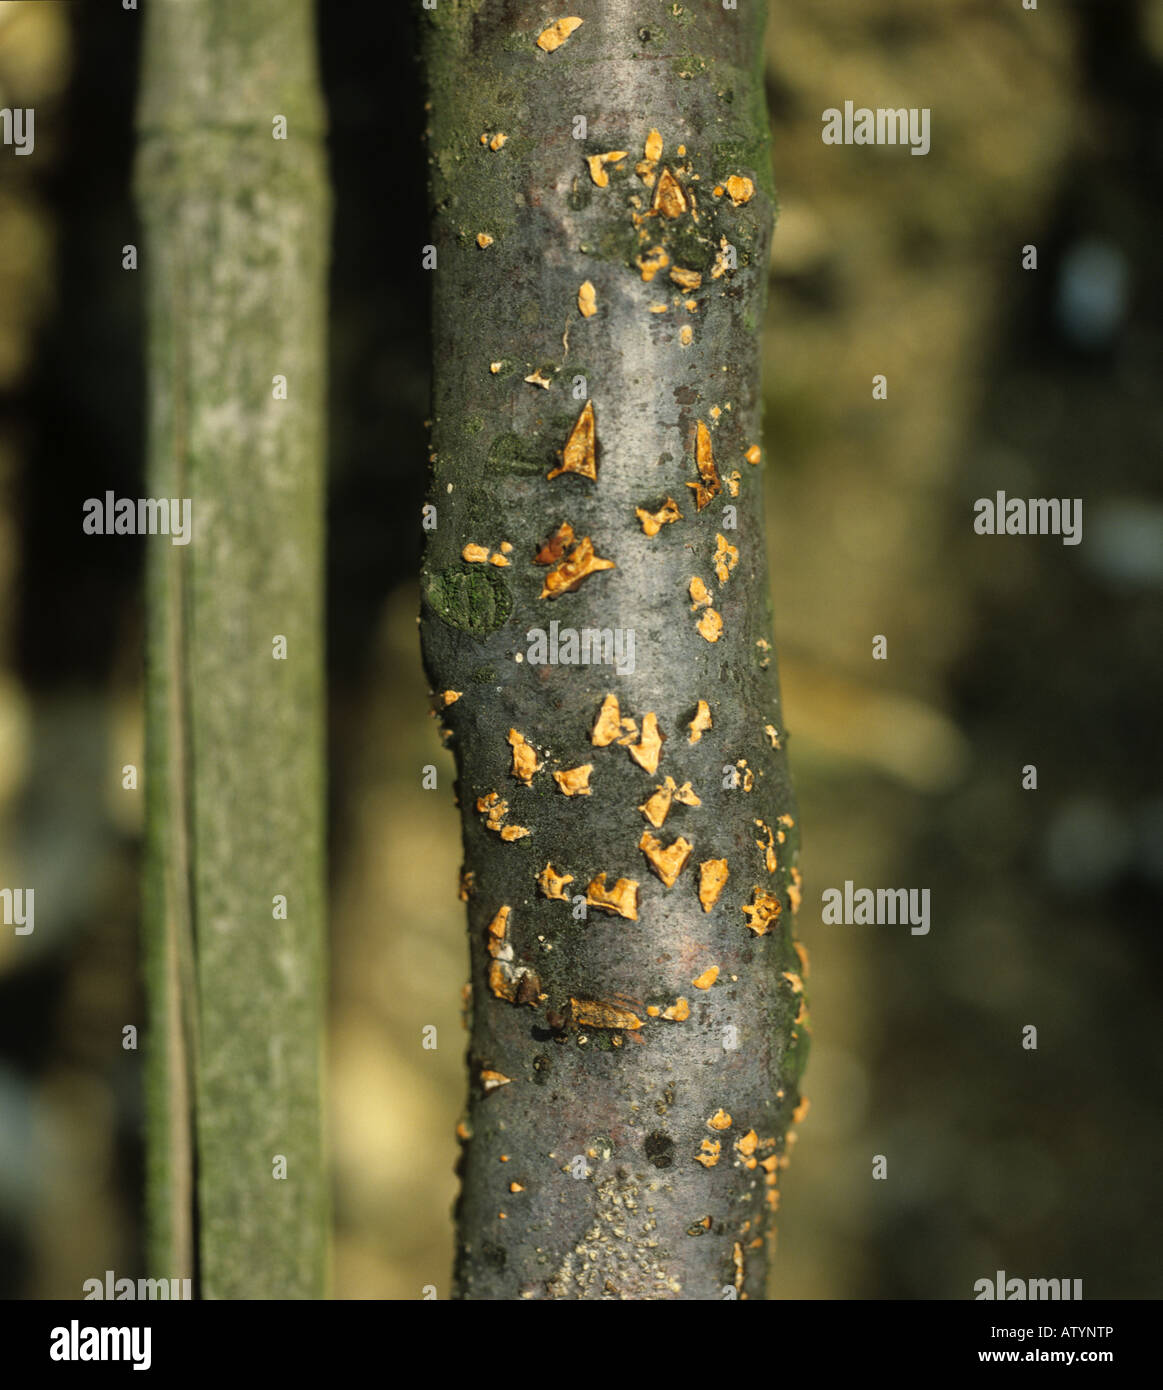 Coral Spot Nectria cinnabarina infection on dying cordon apple tree Stock Photo